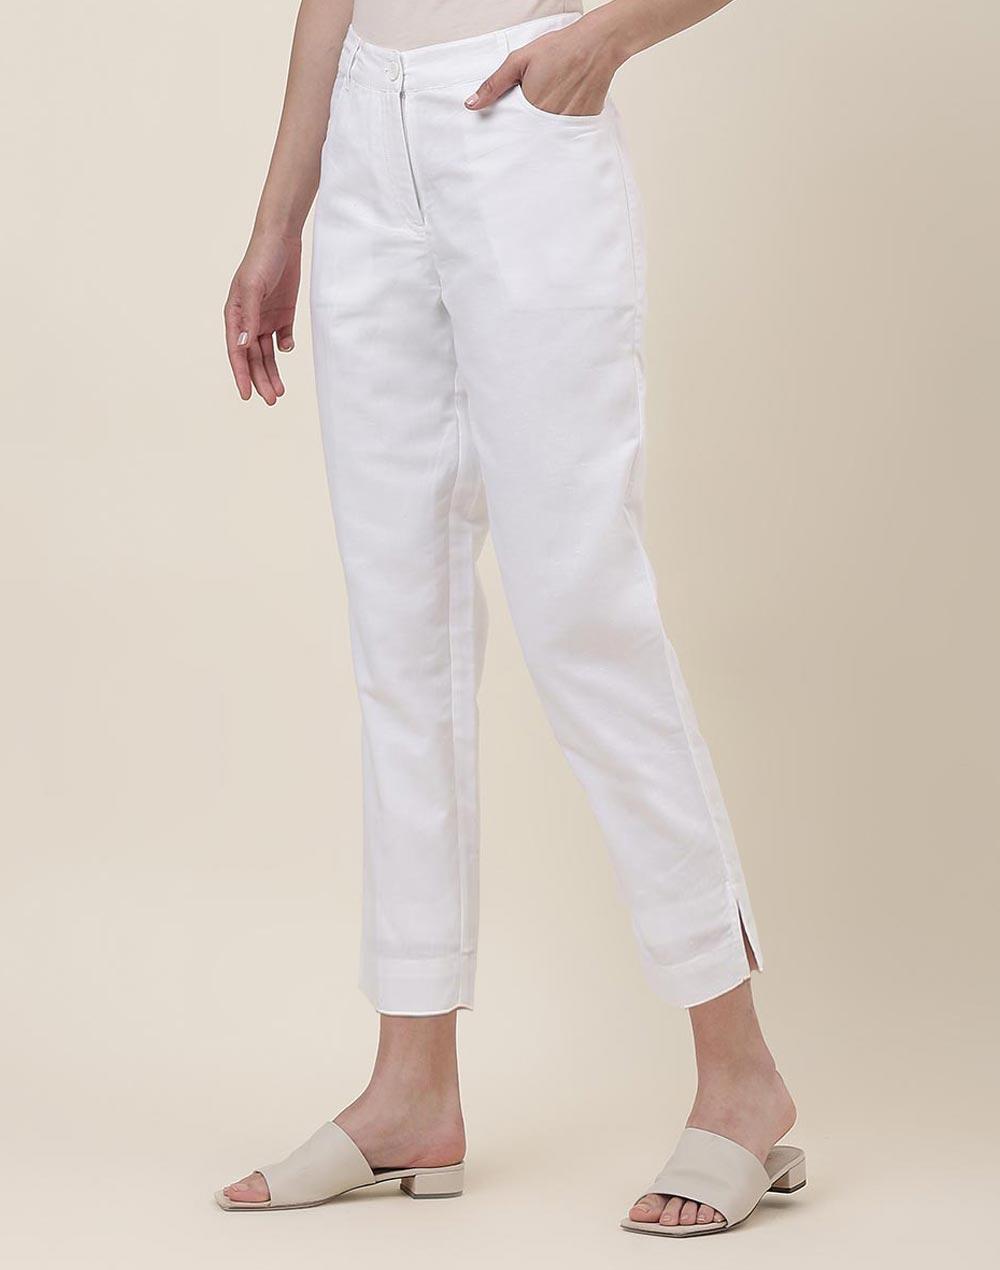 white linen crop length formal pant